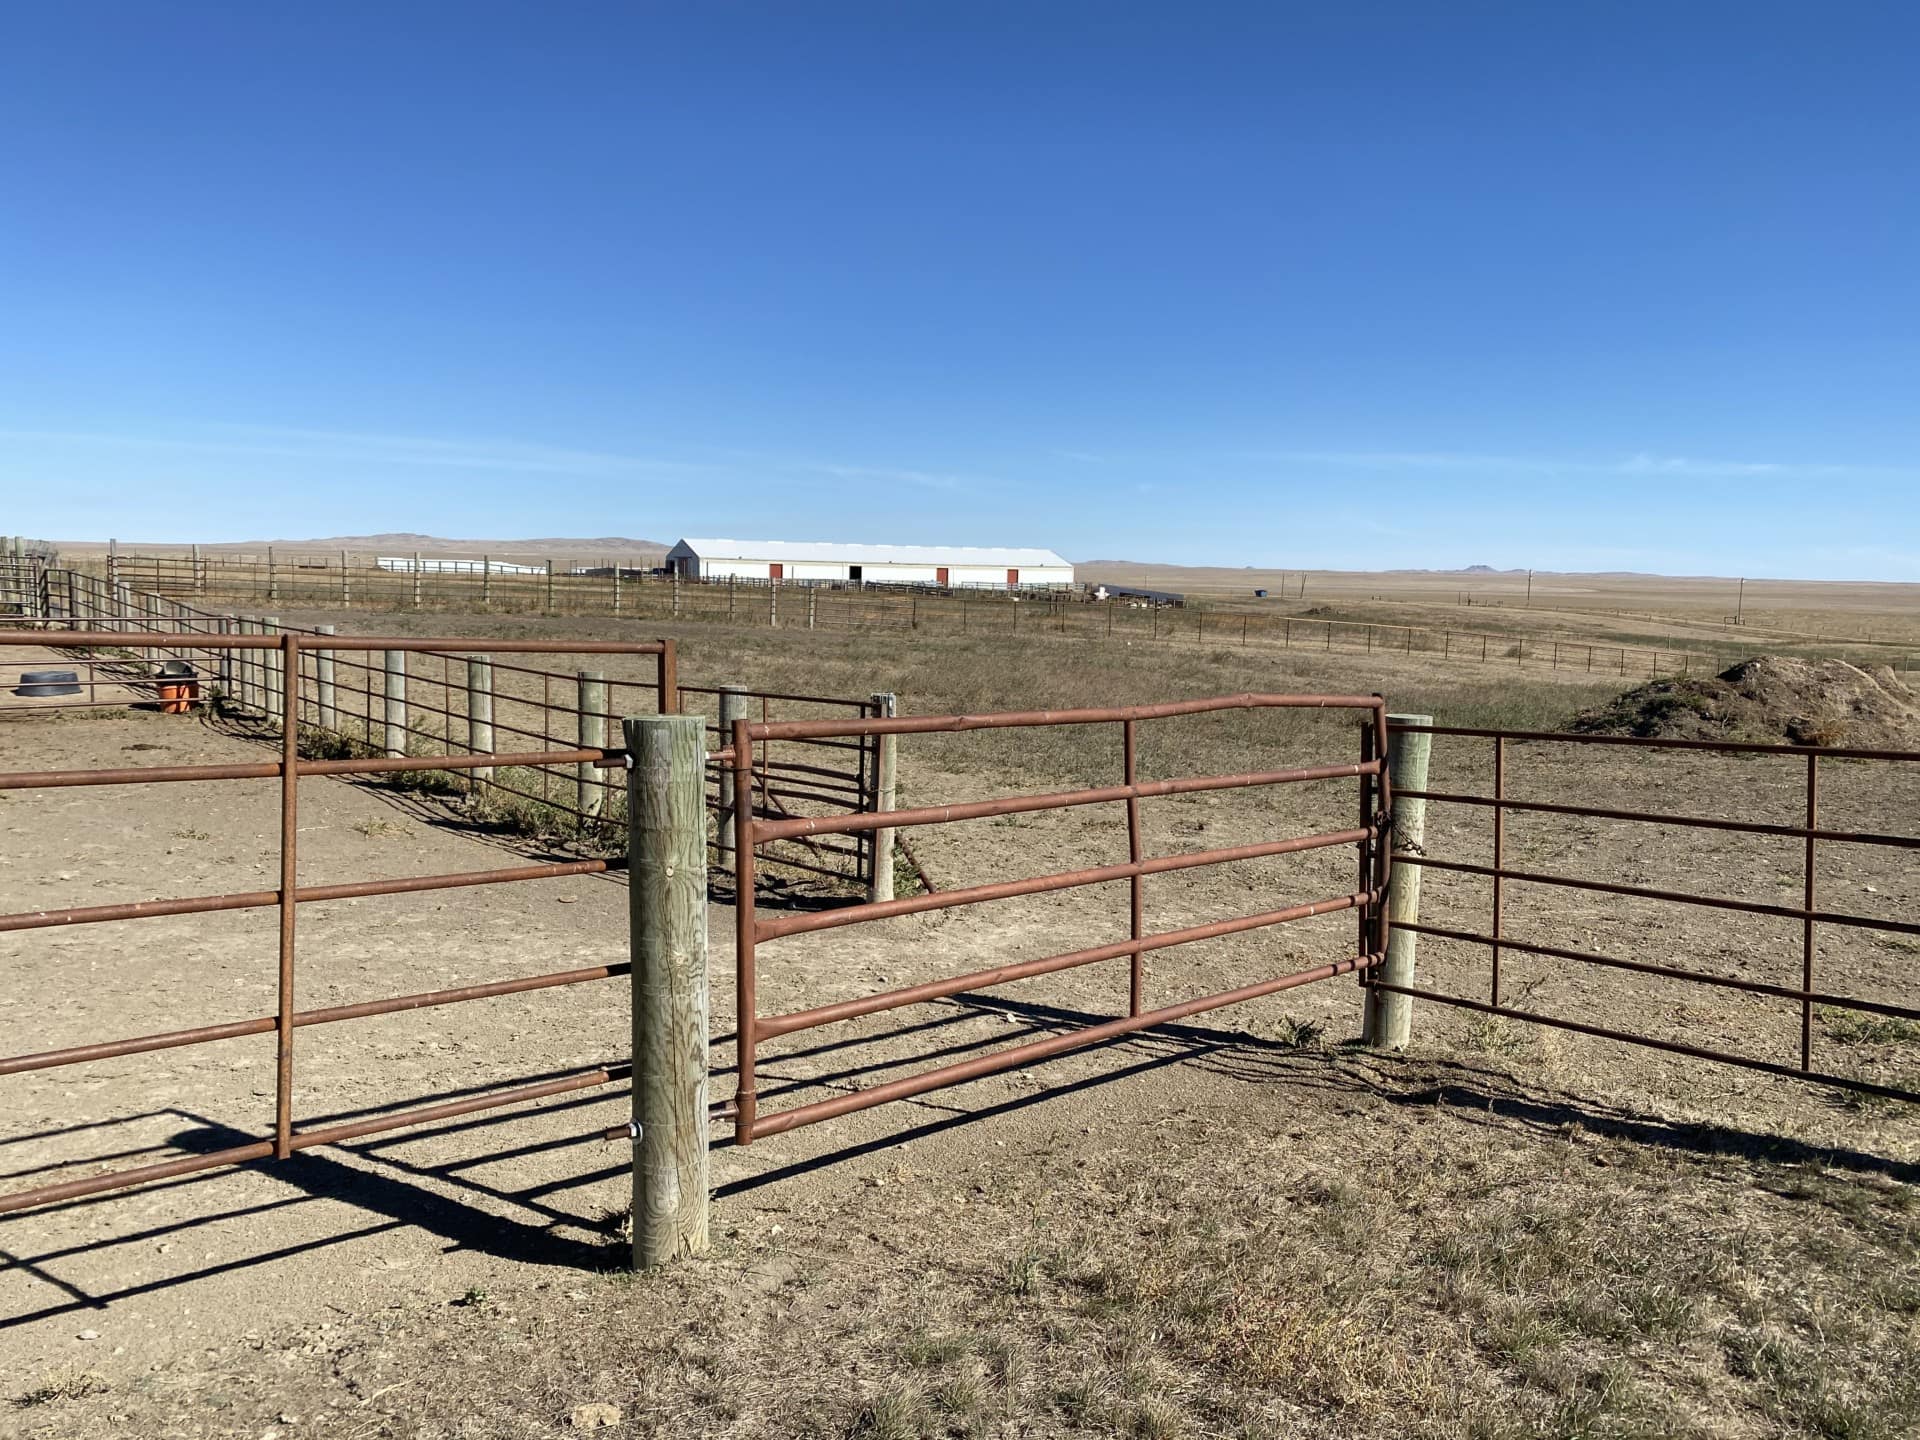 livestock corrals south dakota northern plains grassland cattle ranch